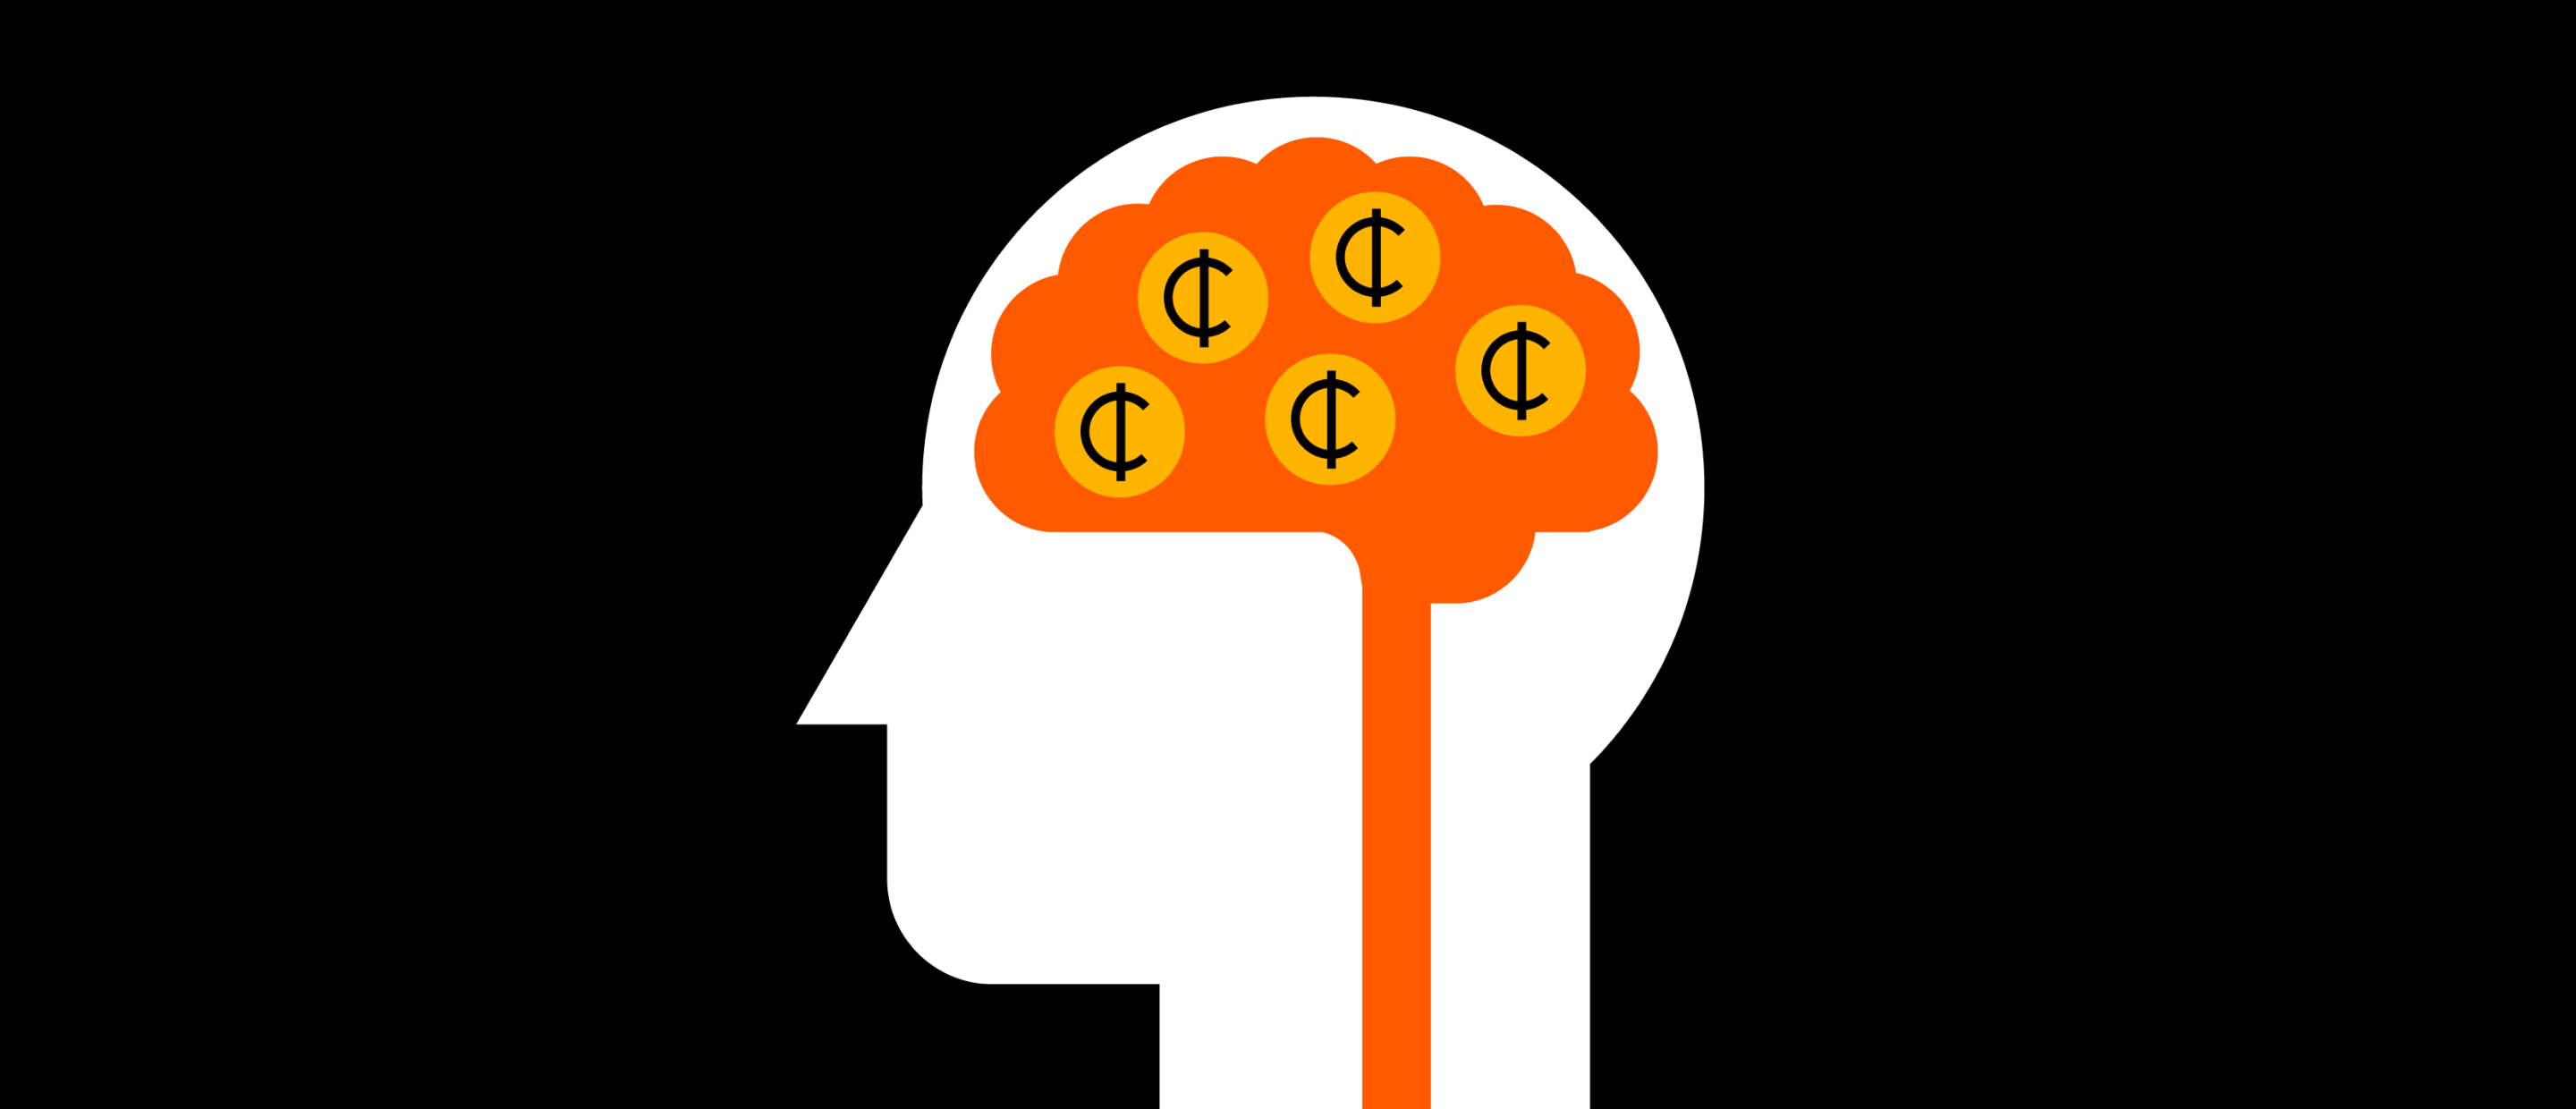 vector of brain with money symbols